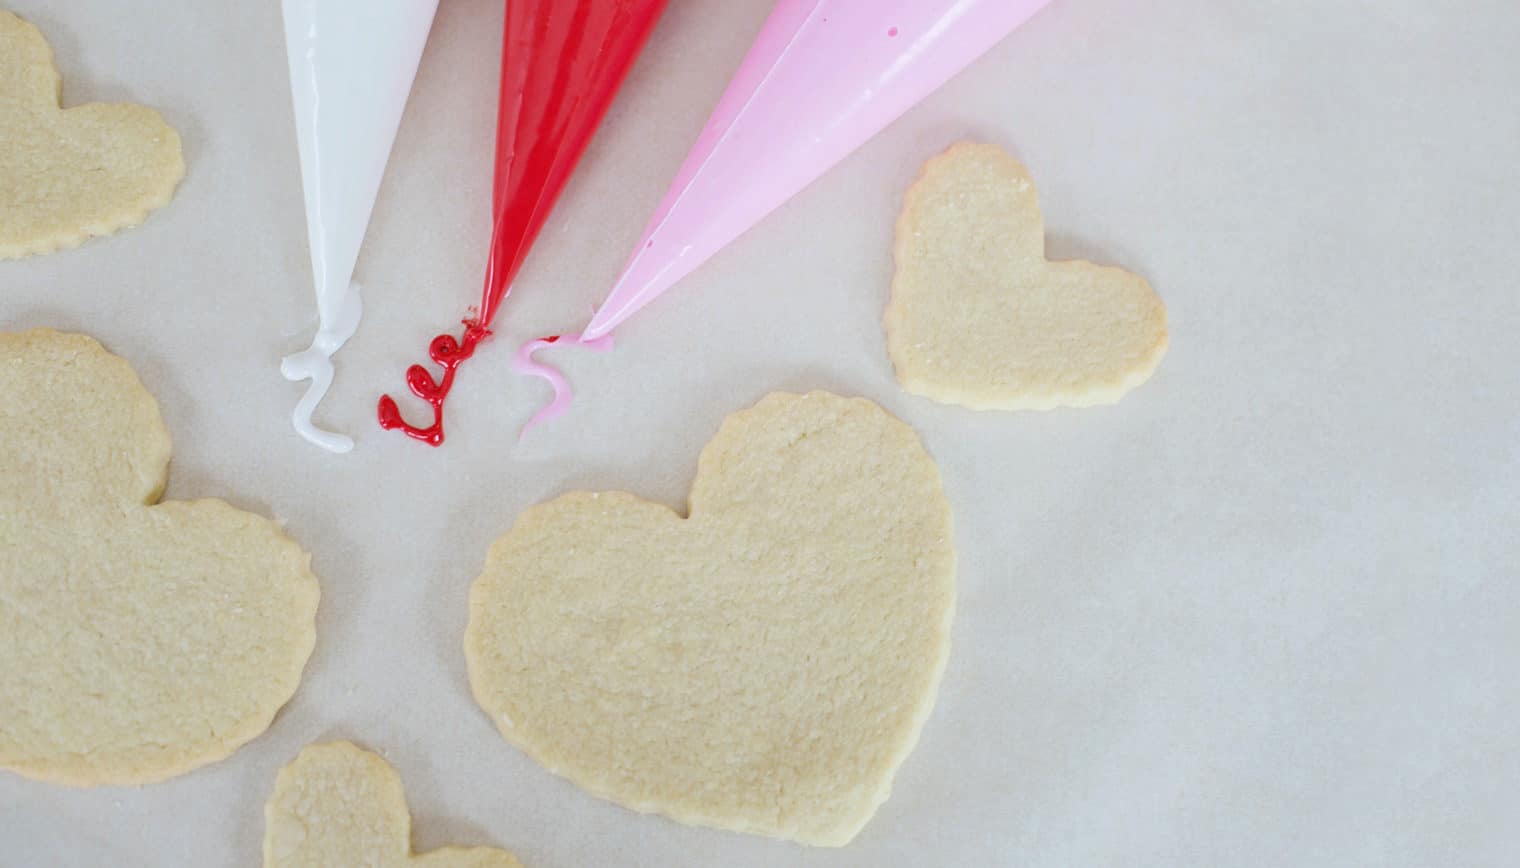 Heart shaped sugar cookies alongside three tubes of icing.